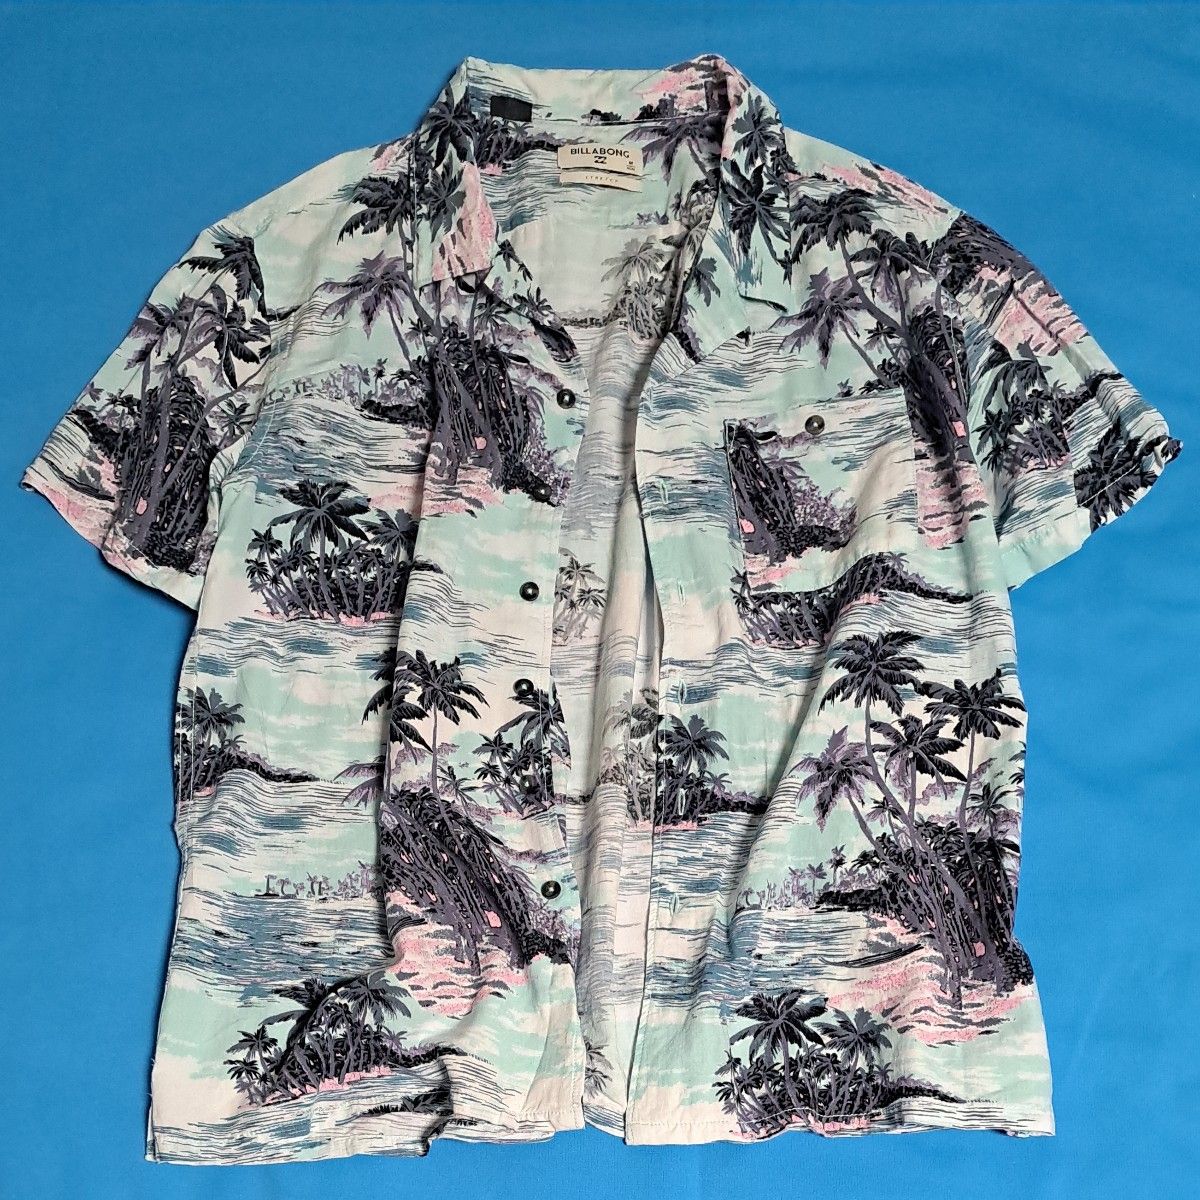 BILLABONG アロハシャツ 半袖 M ヤシの木 ビーチ 水色 グレー 綿 レーヨン 開襟 オープンカラー シャツ ビラボン